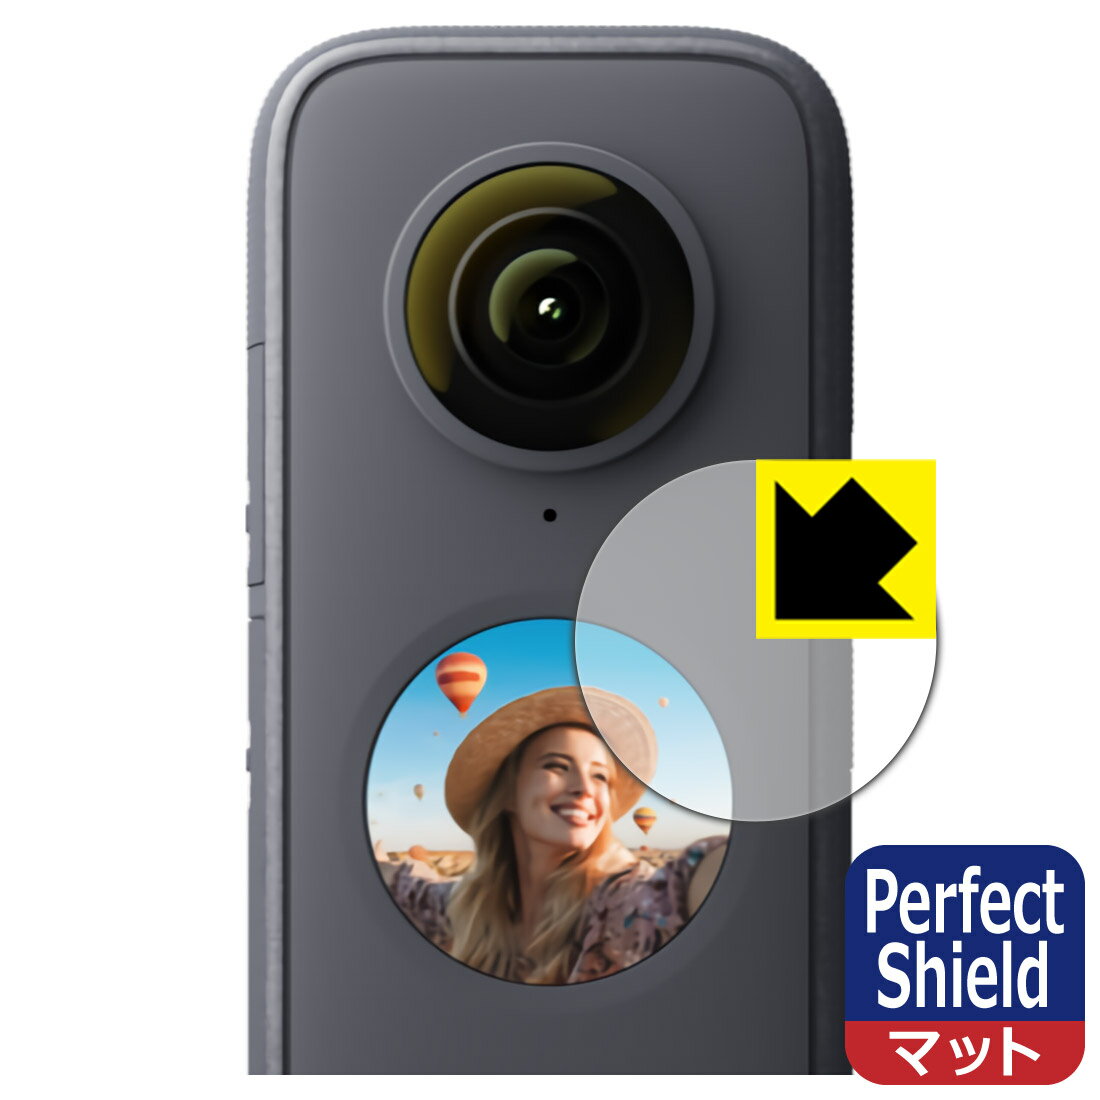 Perfect Shield Insta360 ONE X2 (վ)  ¤ľ